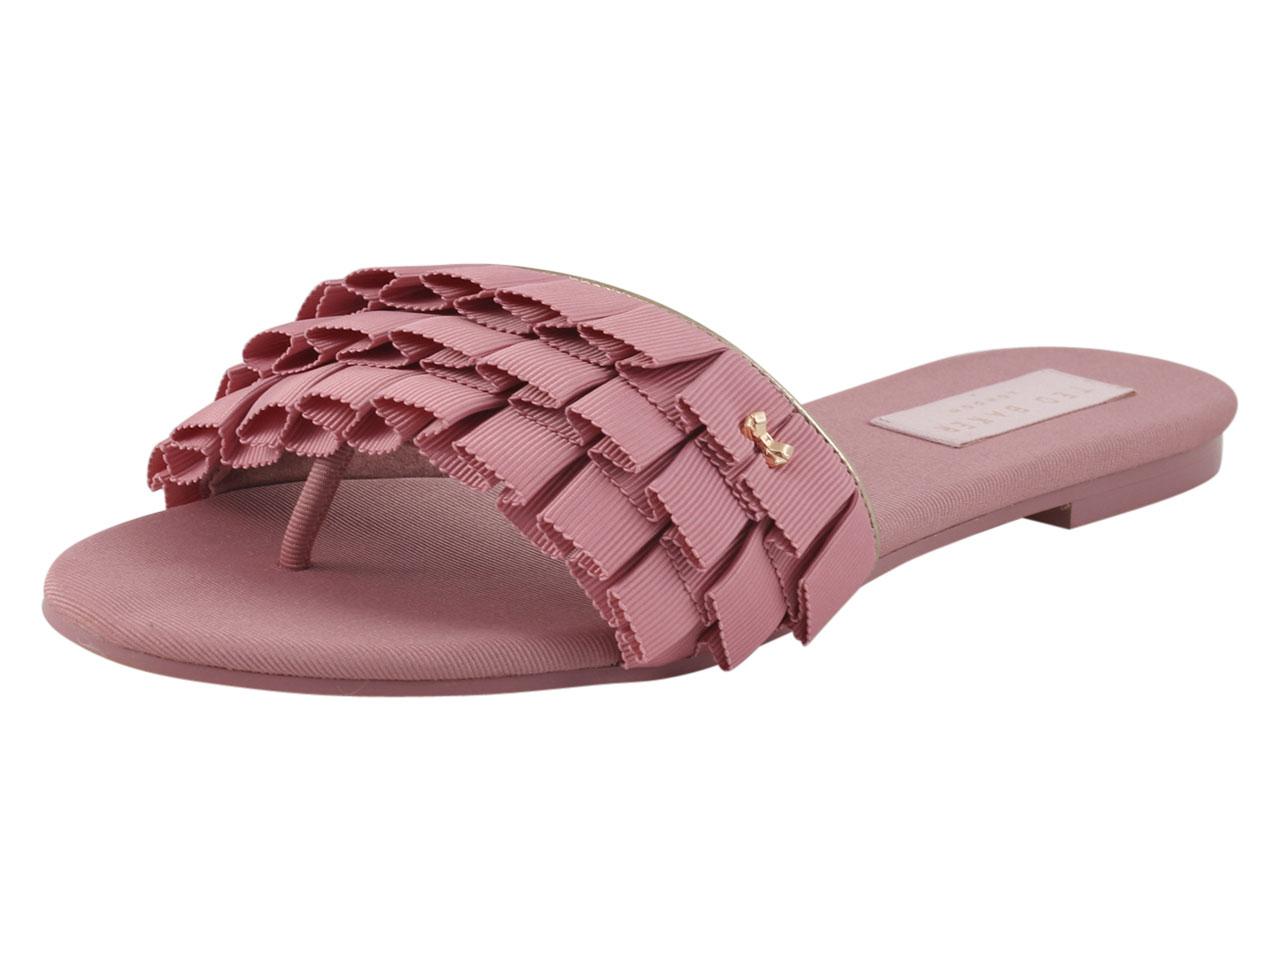 Ted Baker Women's Towdi Slide Sandals Shoes - Pink - 6.5 B(M) US